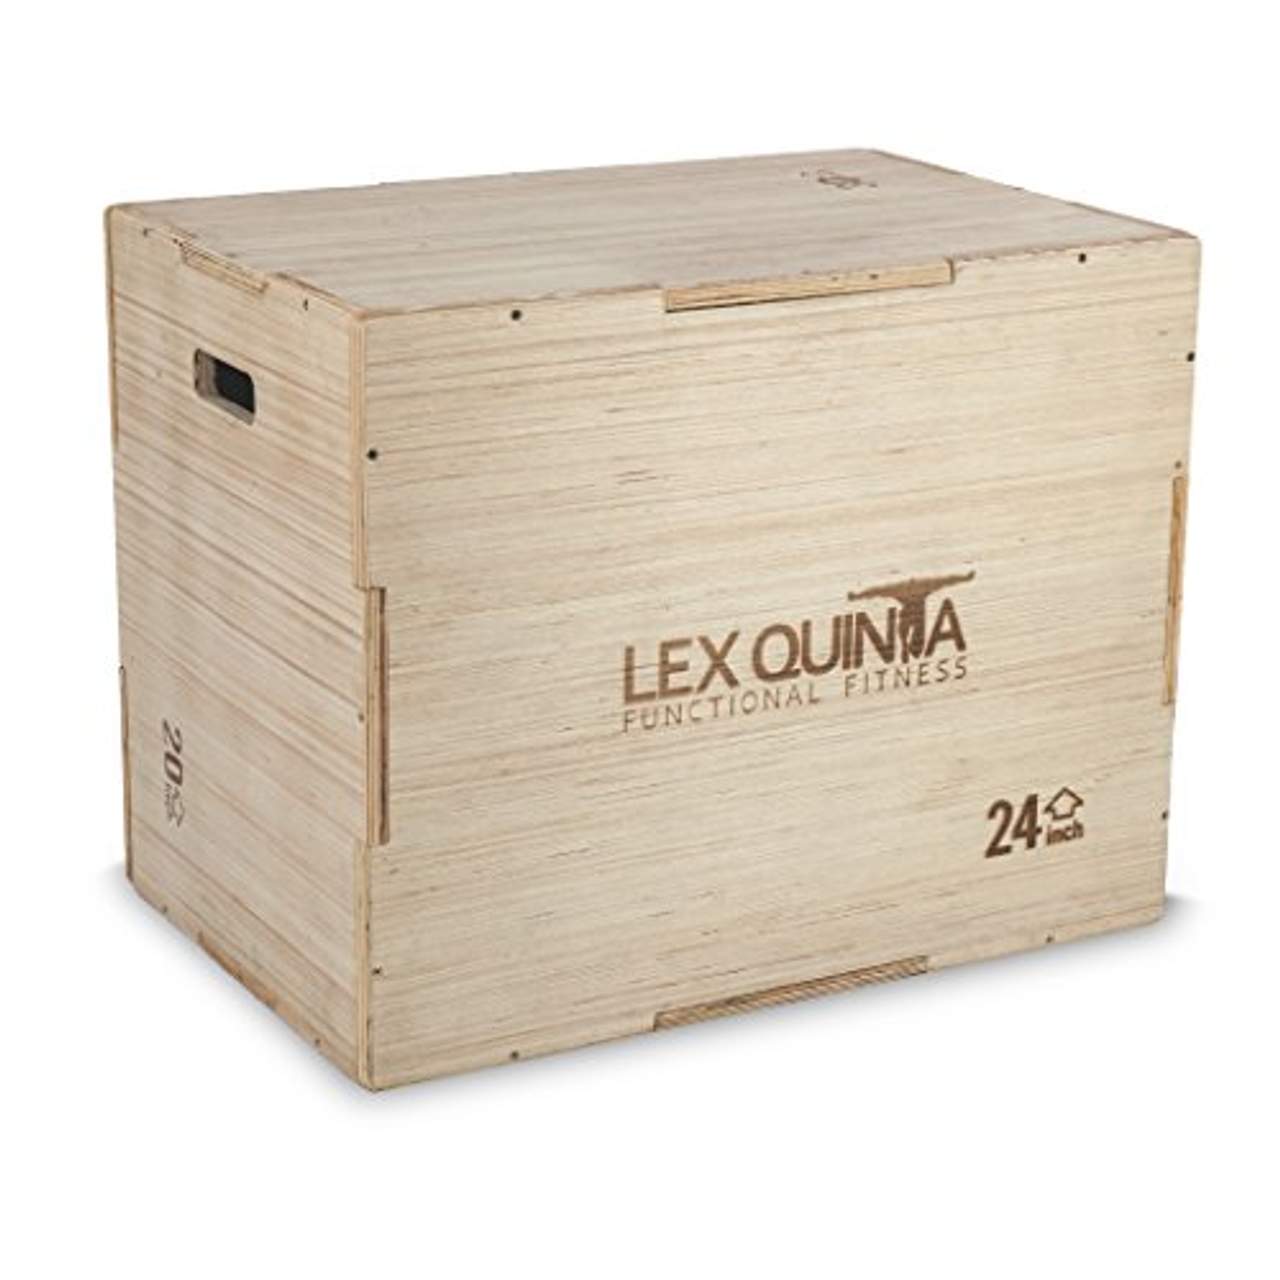 Lex Quinta Plyo Box Holz 3 in 1 im Standardmaß